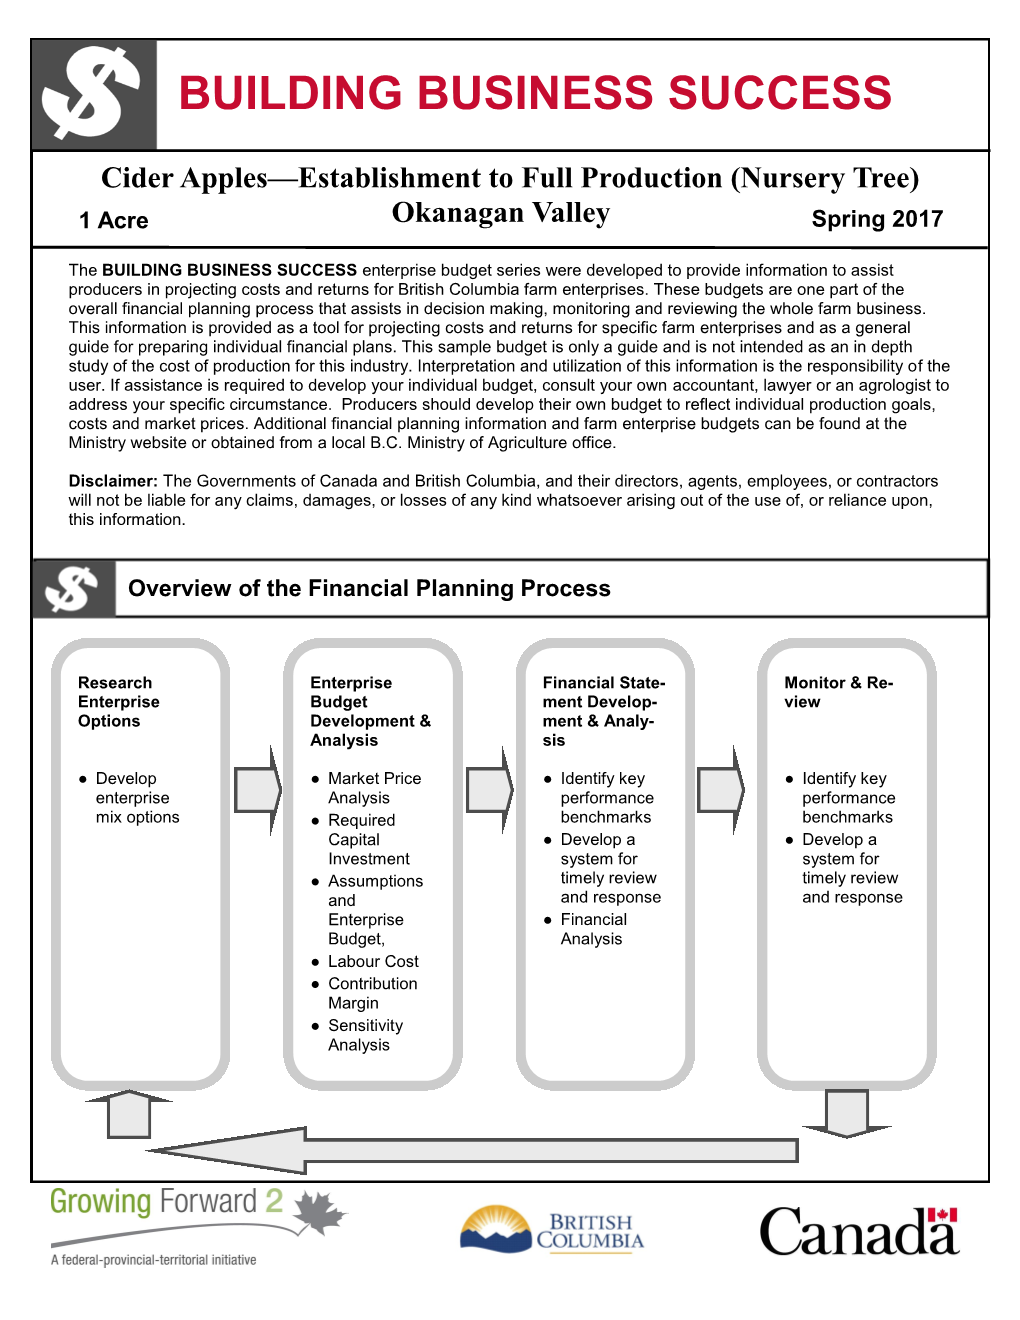 Cider Apples—Establishment to Full Production (Nursery Tree) 1 Acre Okanagan Valley Spring 2017